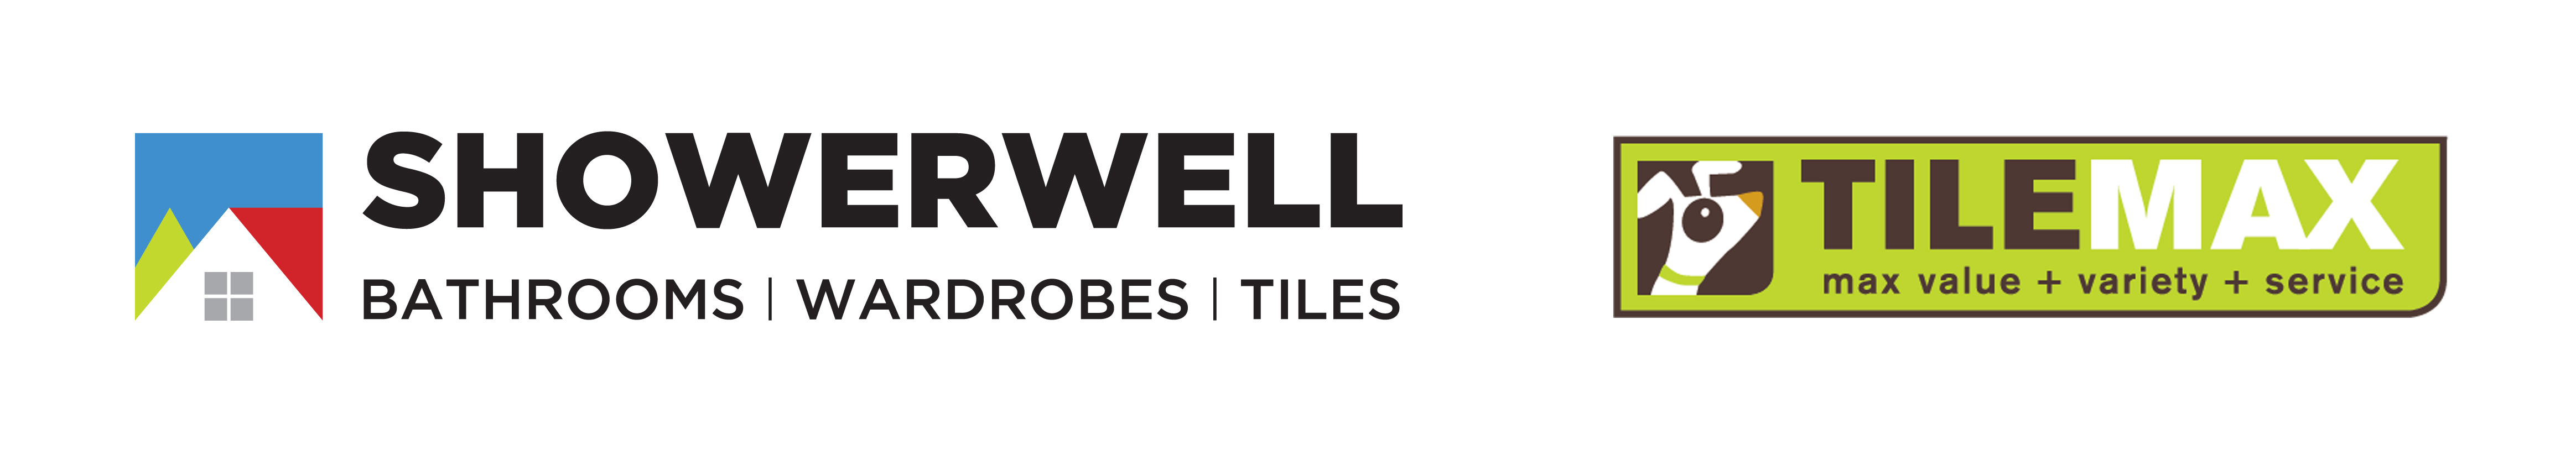 108983161 showerwell bwt tilemax rgb logo